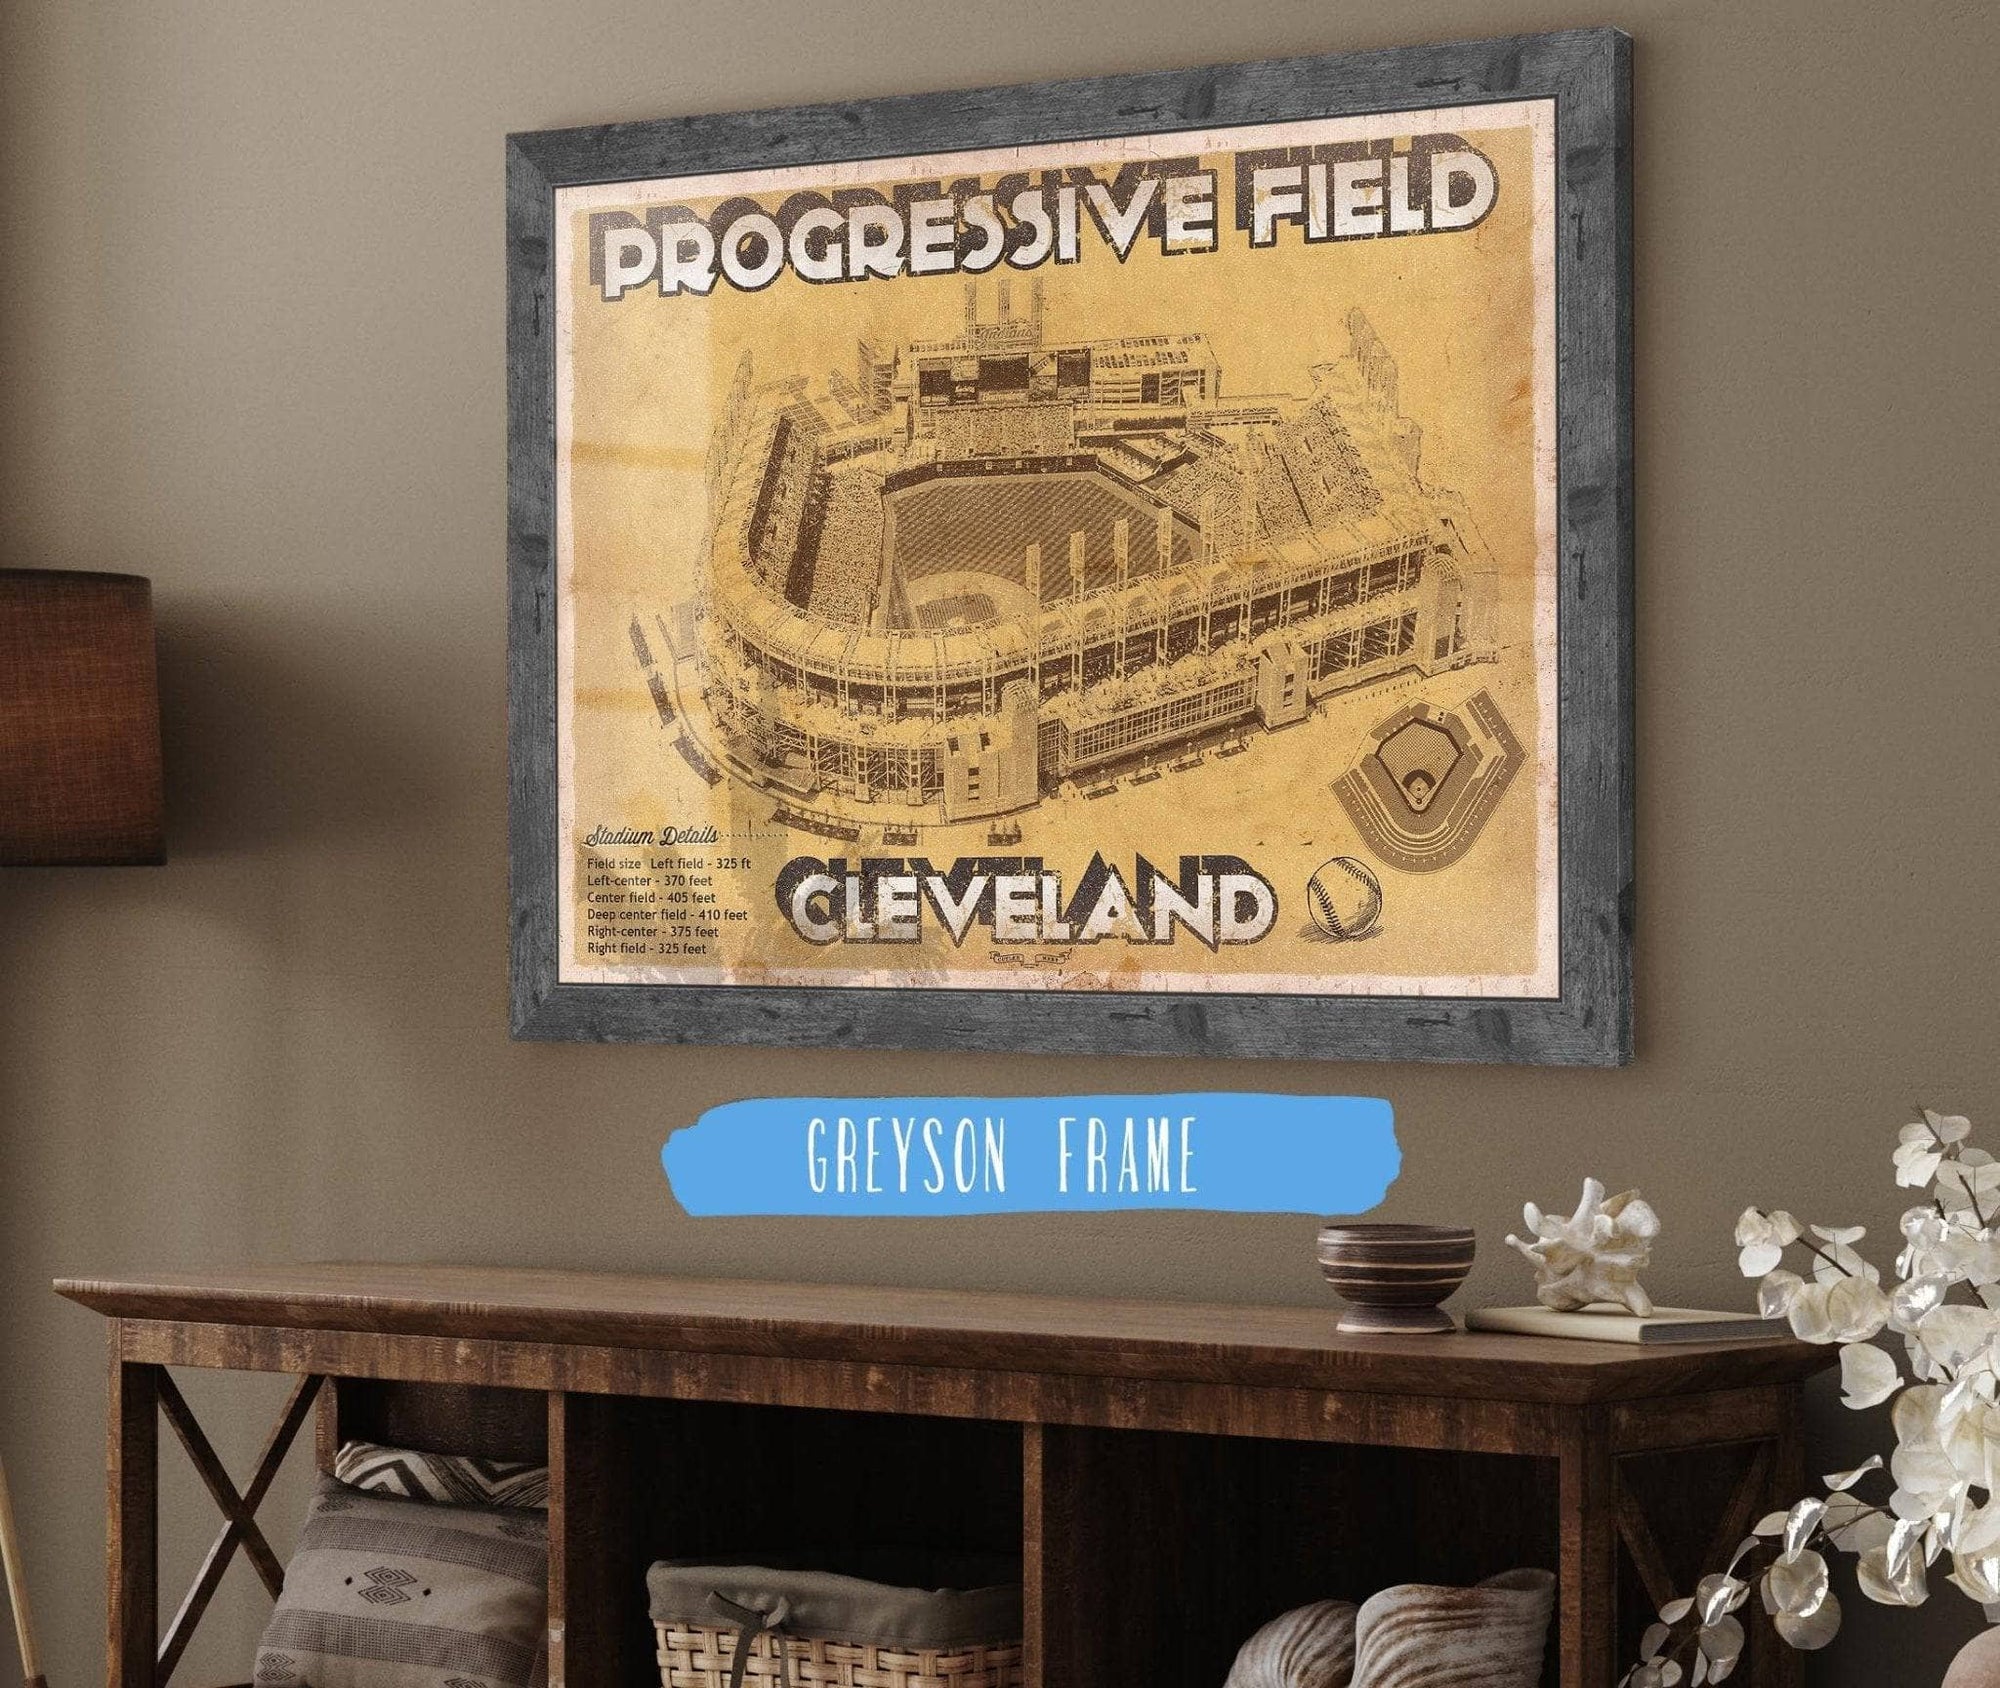 Cutler West Baseball Collection 14" x 11" / Greyson Frame Cleveland Indians Progressive Field Vintage Baseball Print 650217038_68098